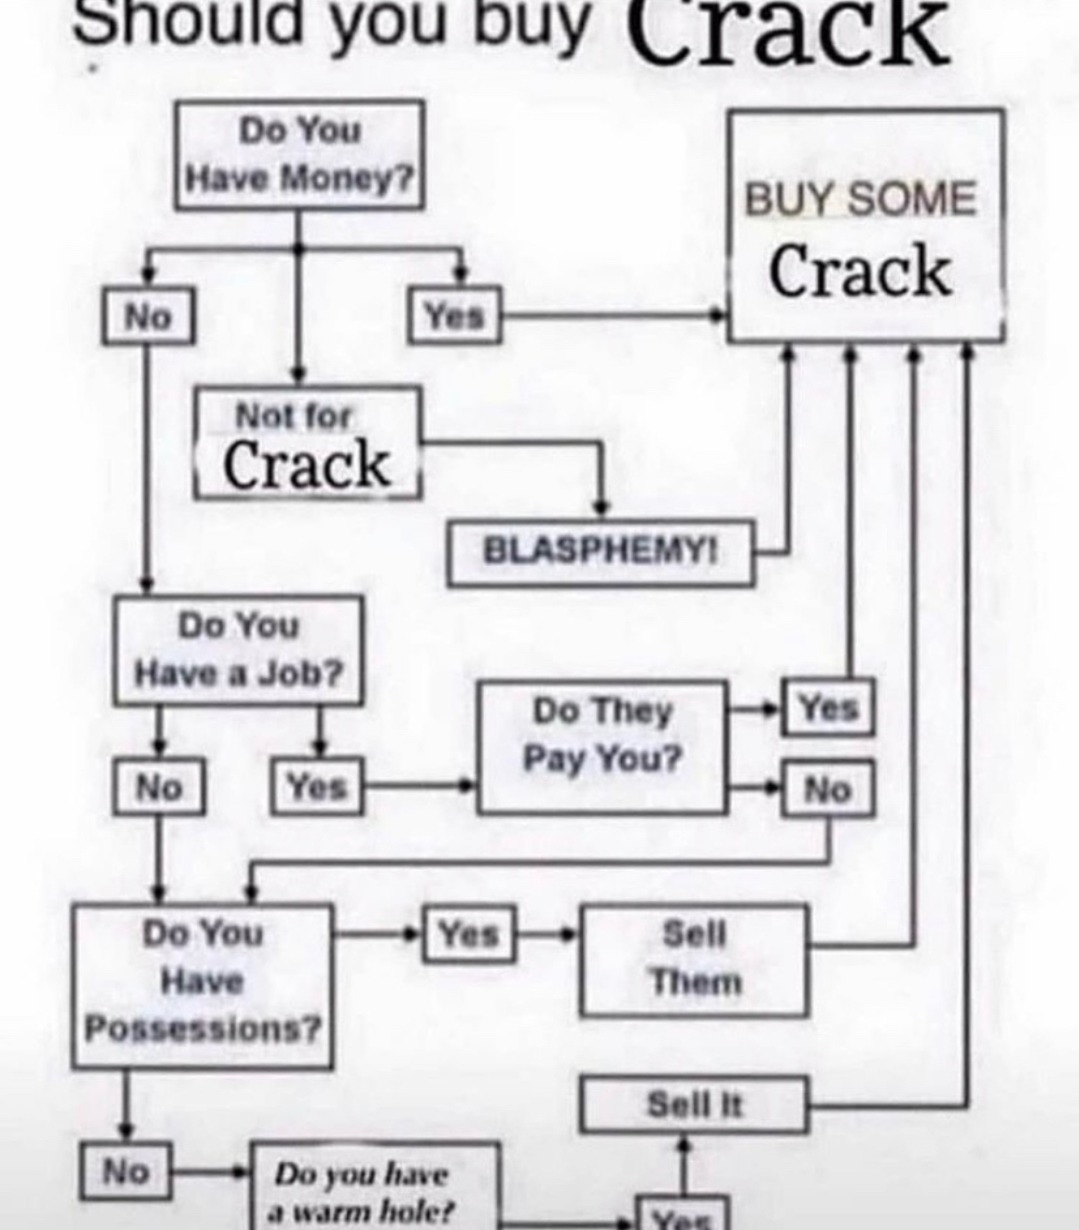 In conclusion: buy crack - meme